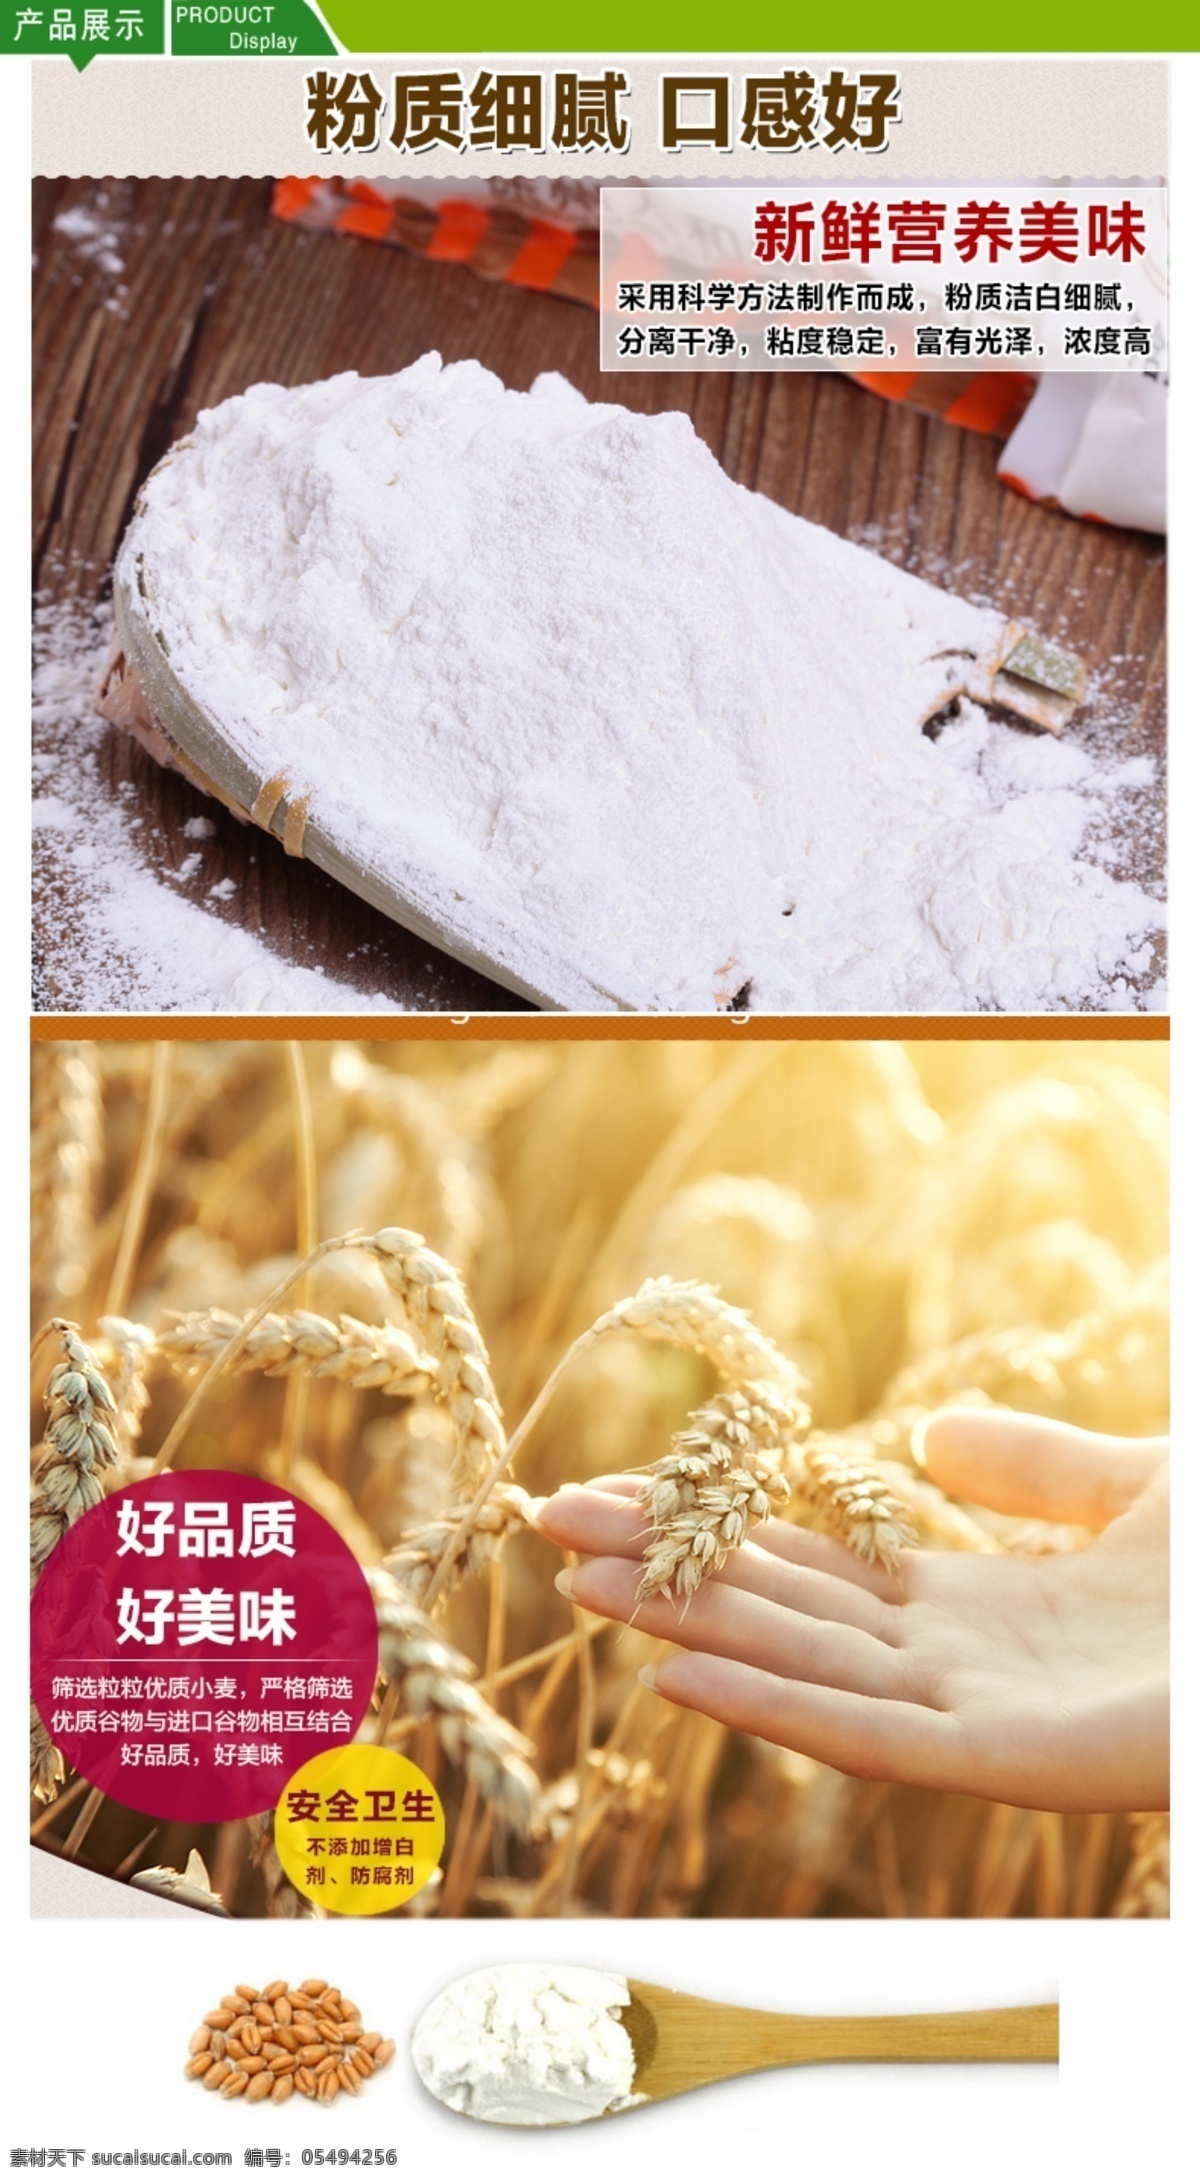 小麦粉 面粉 详情图 分层 白色